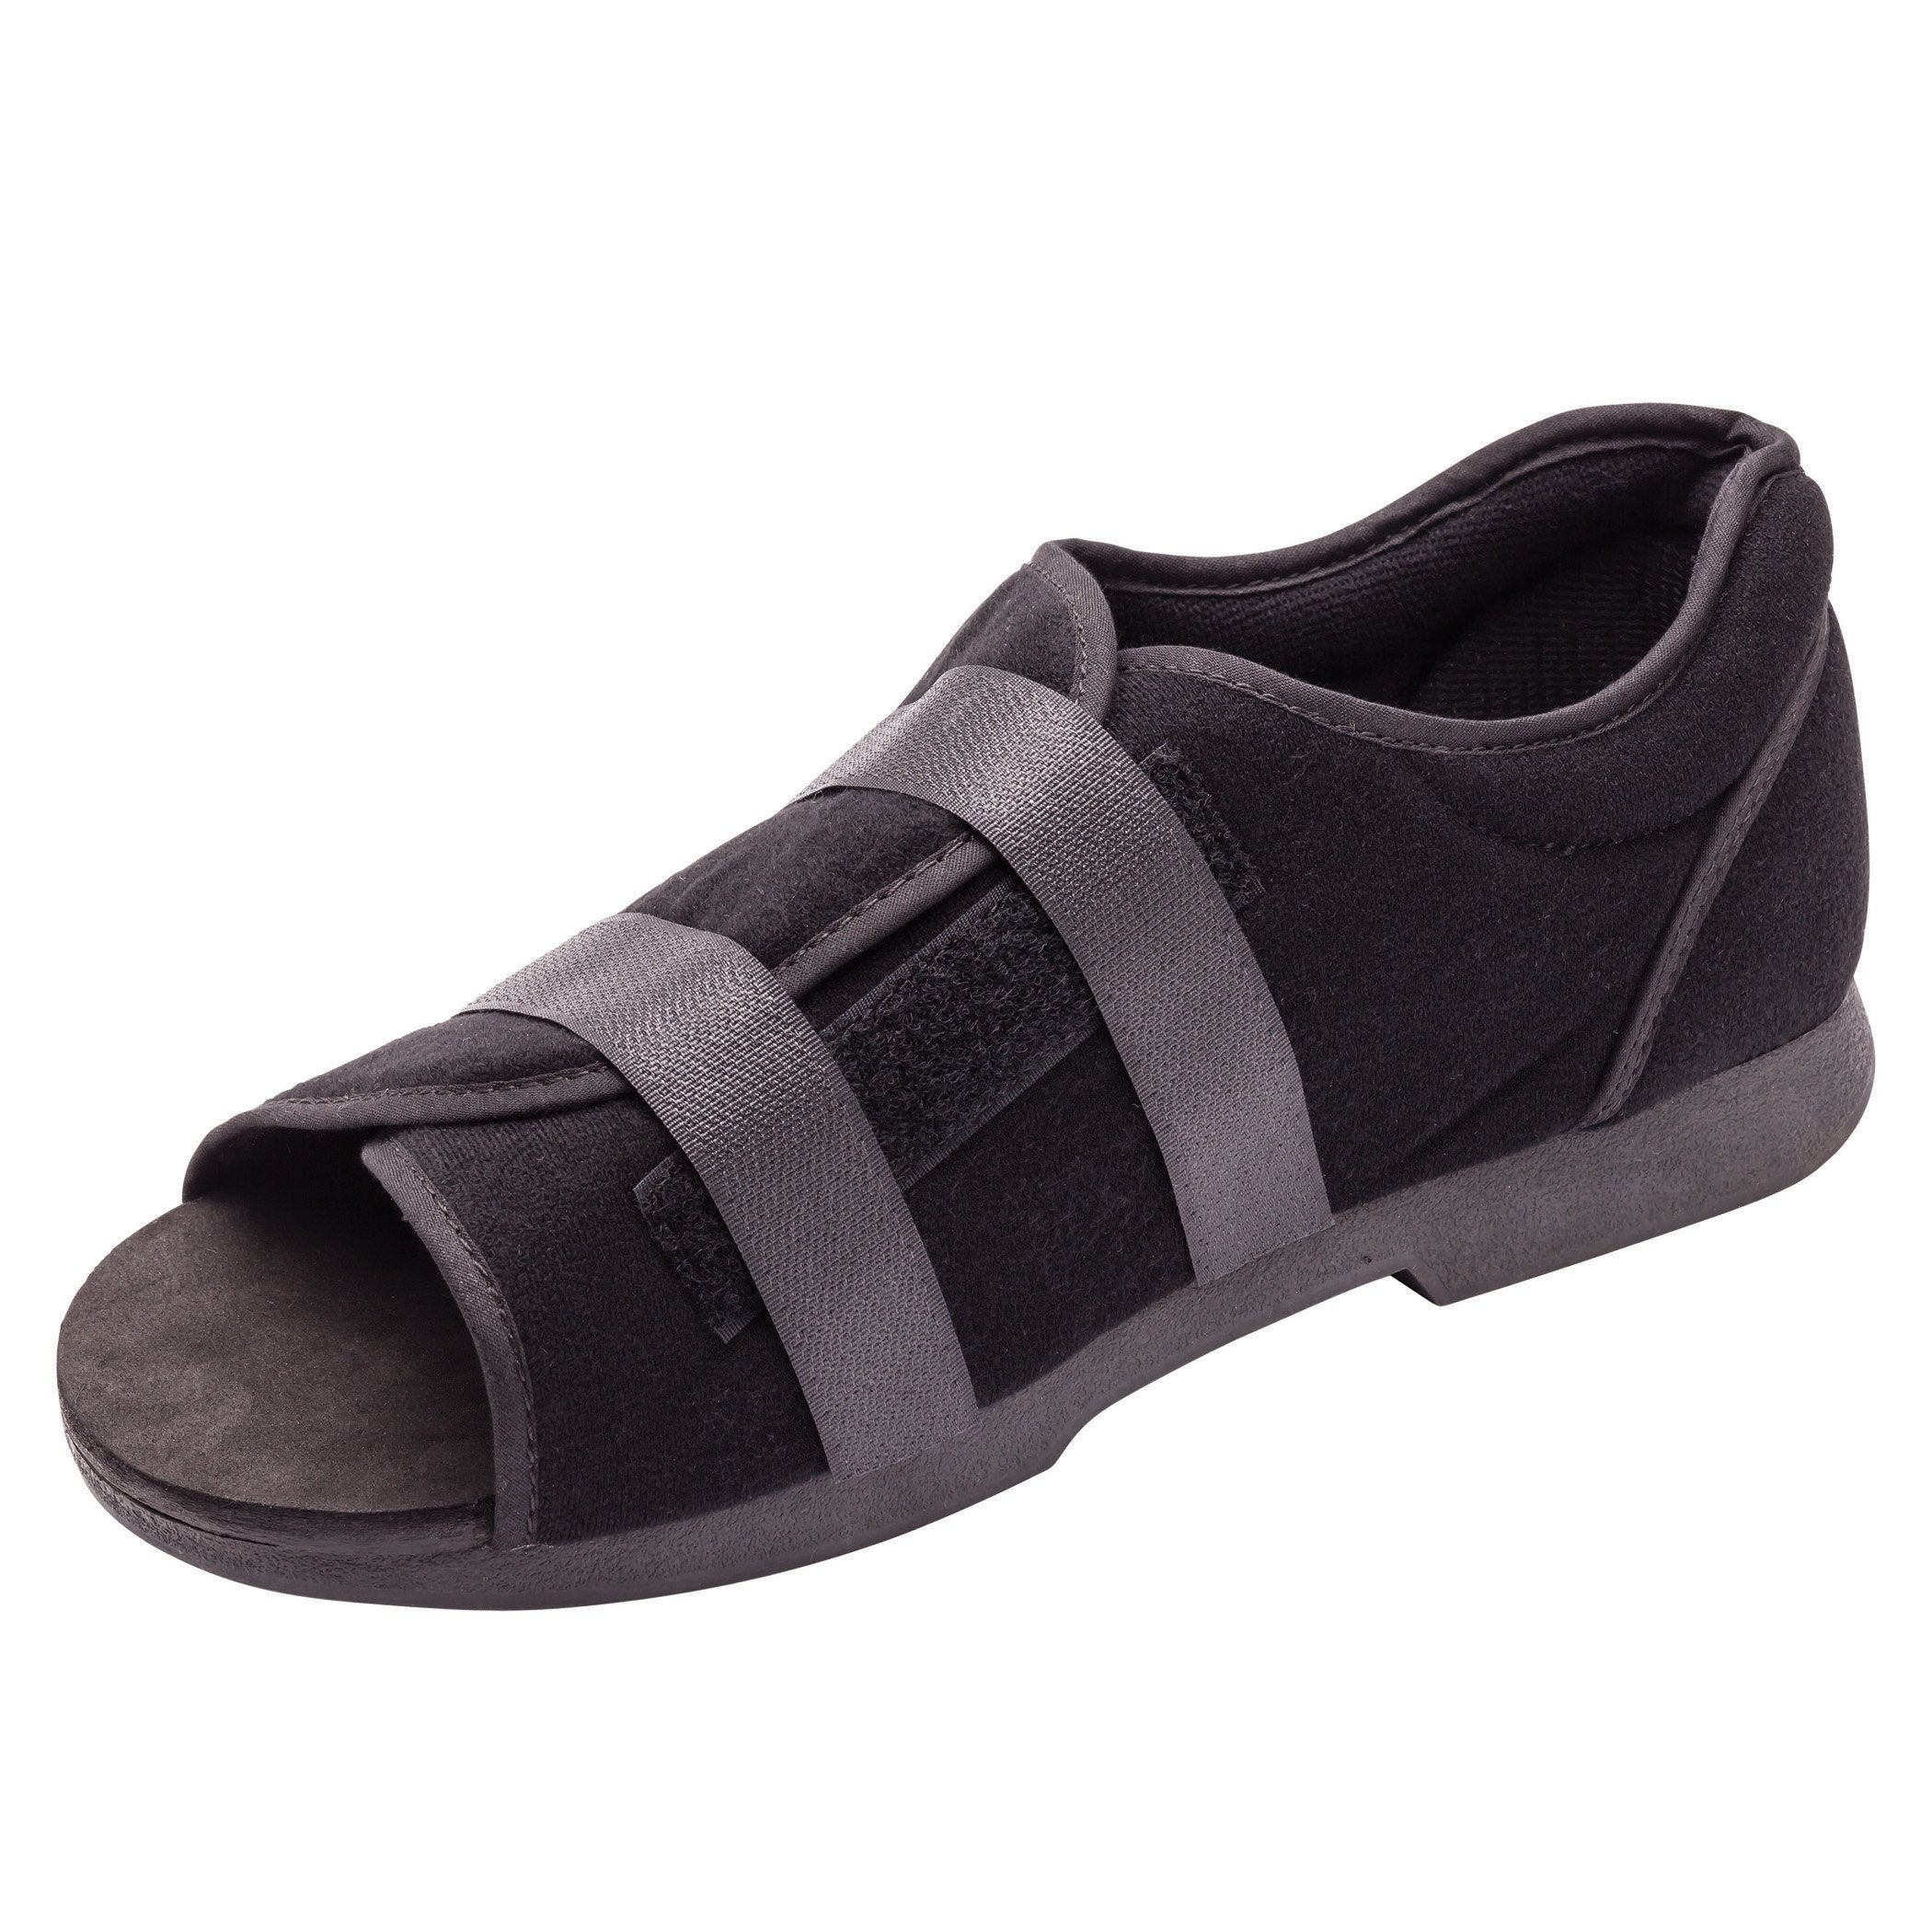 Ossur 18003 Soft Top Post-Op Shoe Female Small Adult Black